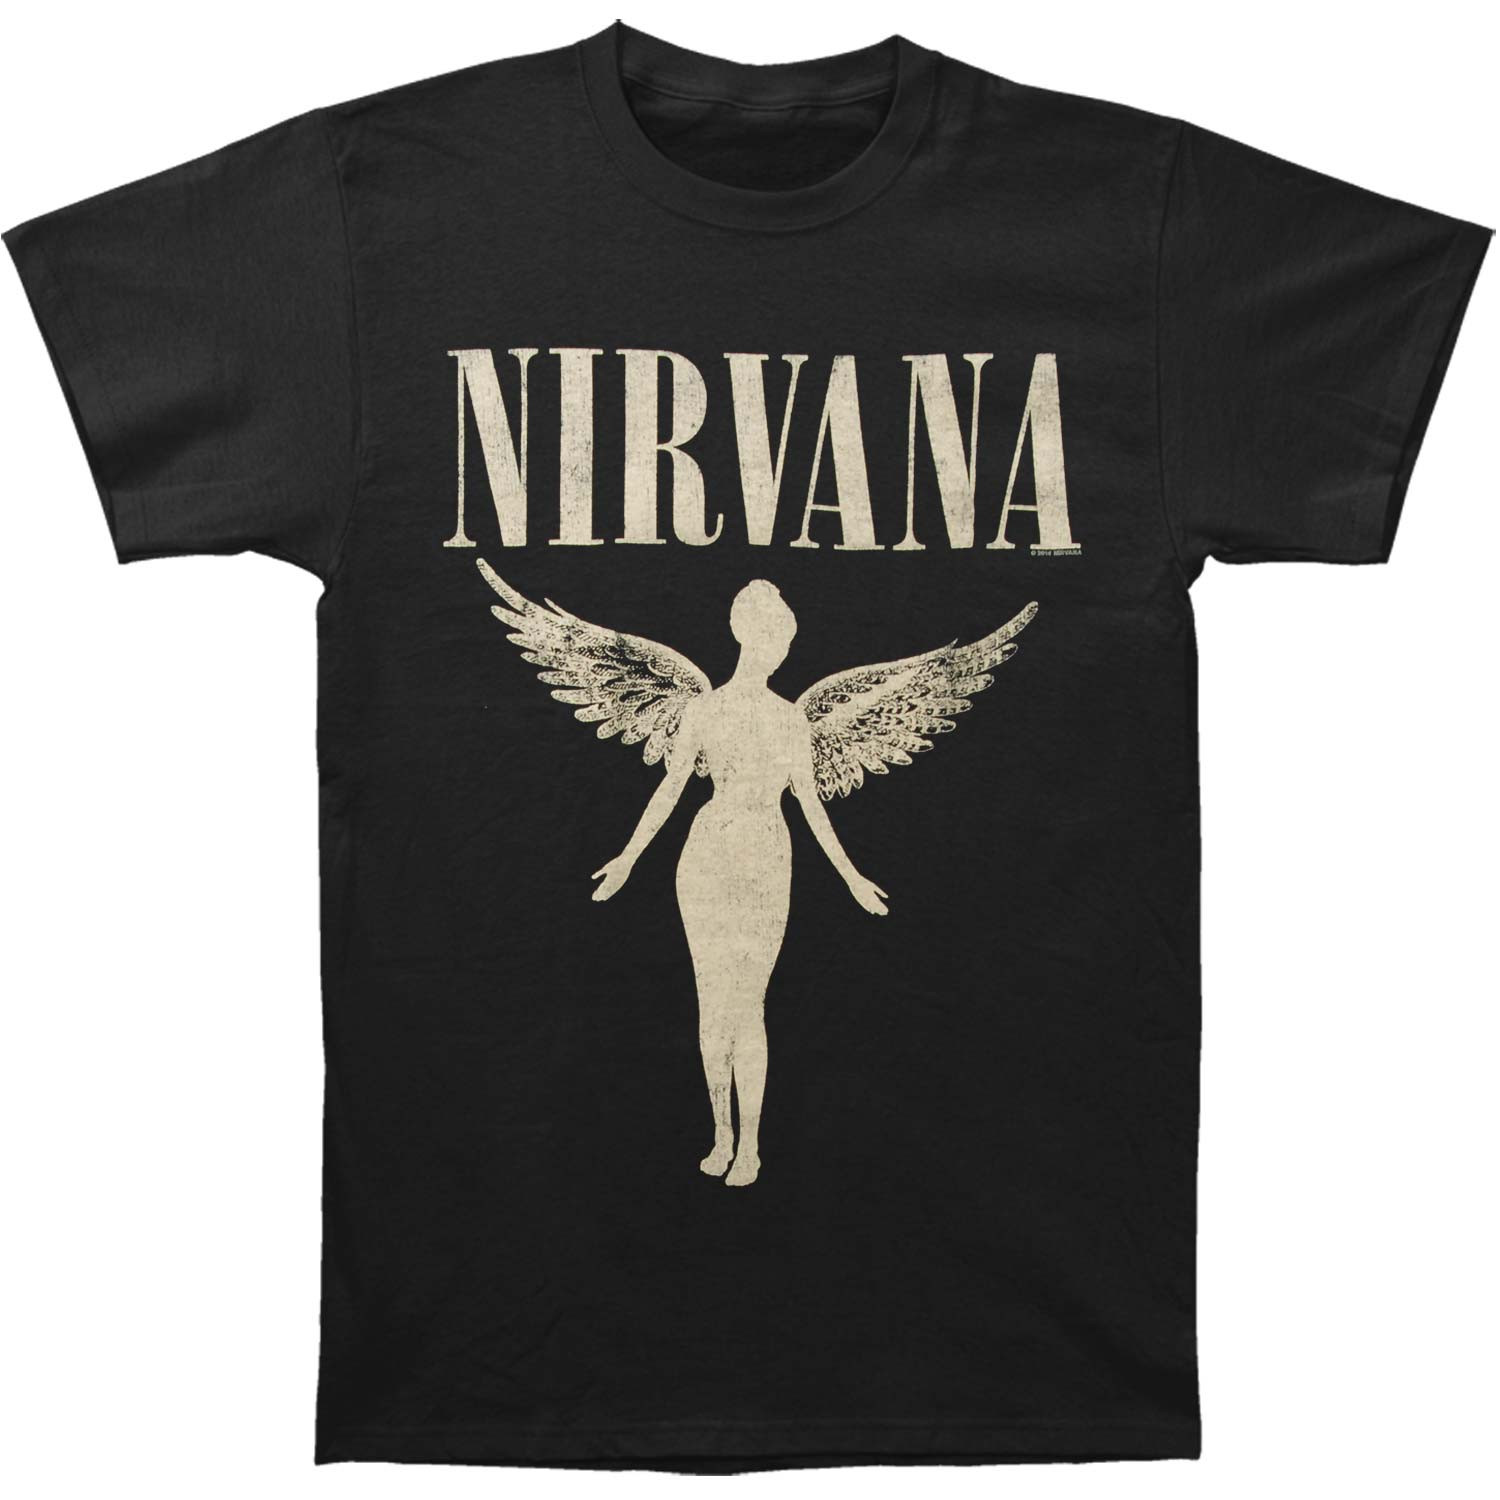 Nirvana t. Футболка Nirvana in utero. In utero Nirvana футболка мужская. Мерч Nirvana HM. Футболка Nirvana HM.